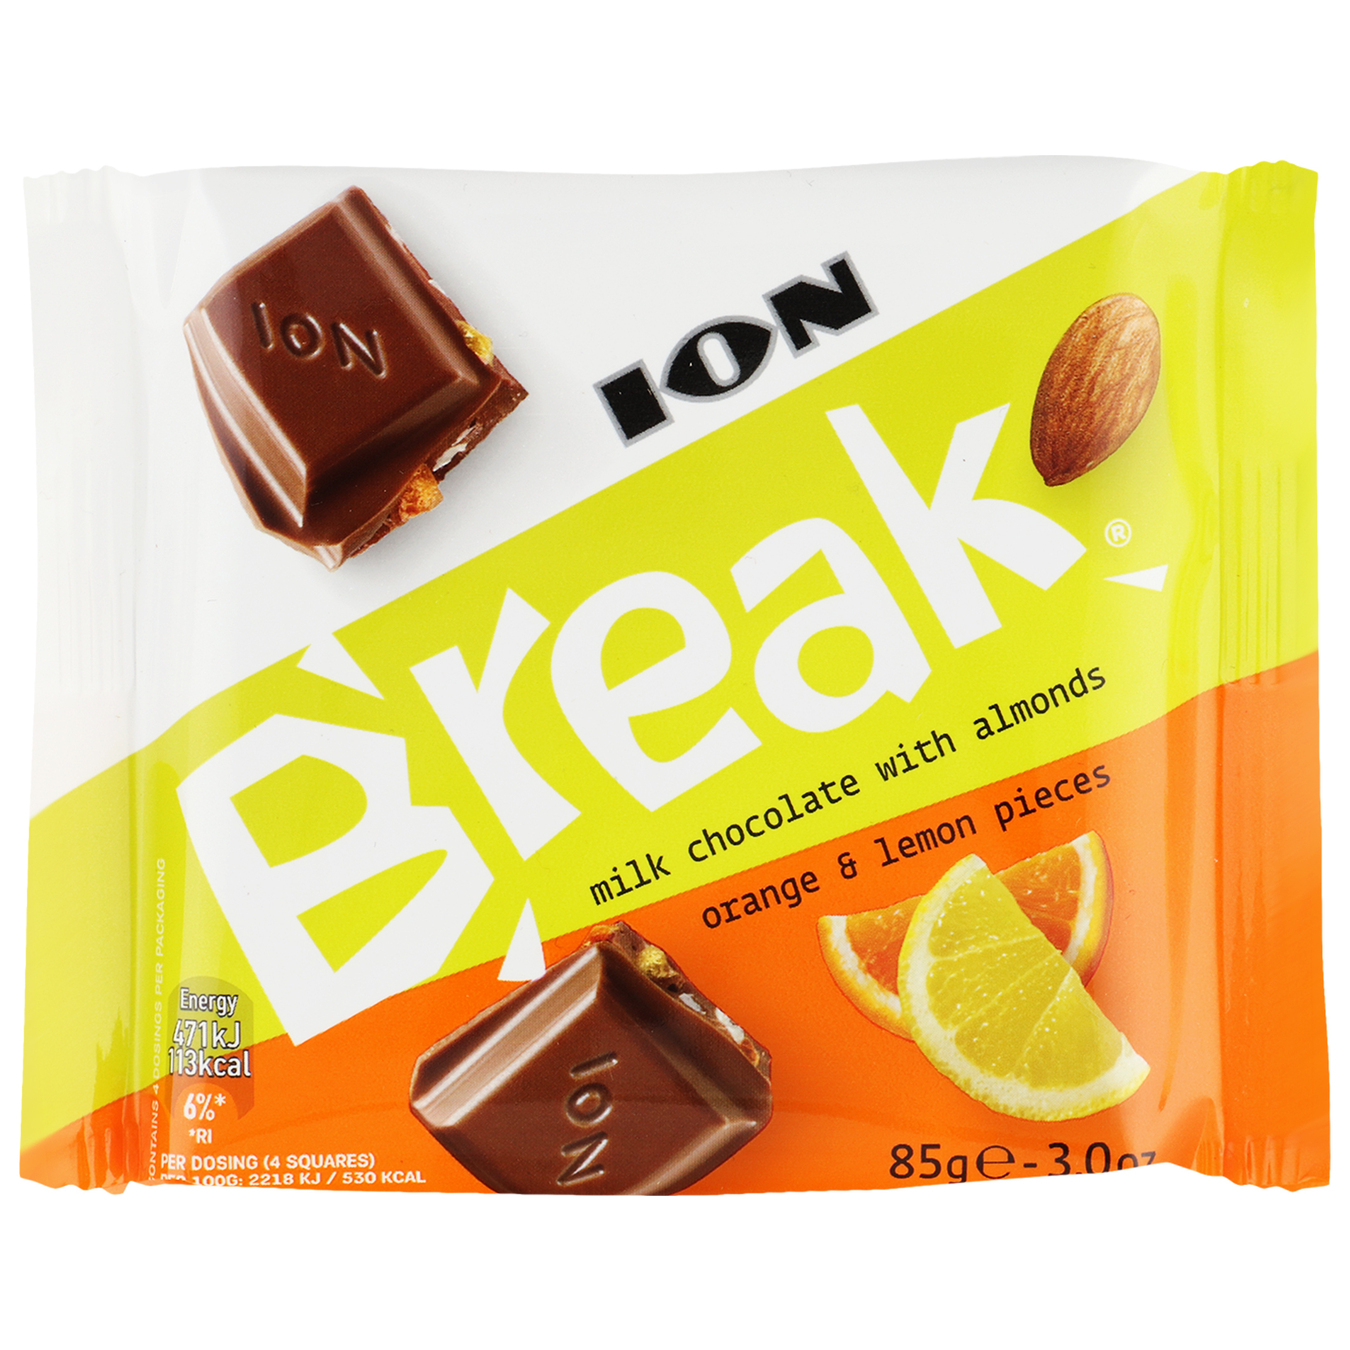 ION Break Milk Chocolate Bar with Slices of Orange Lemon and Almonds 85g